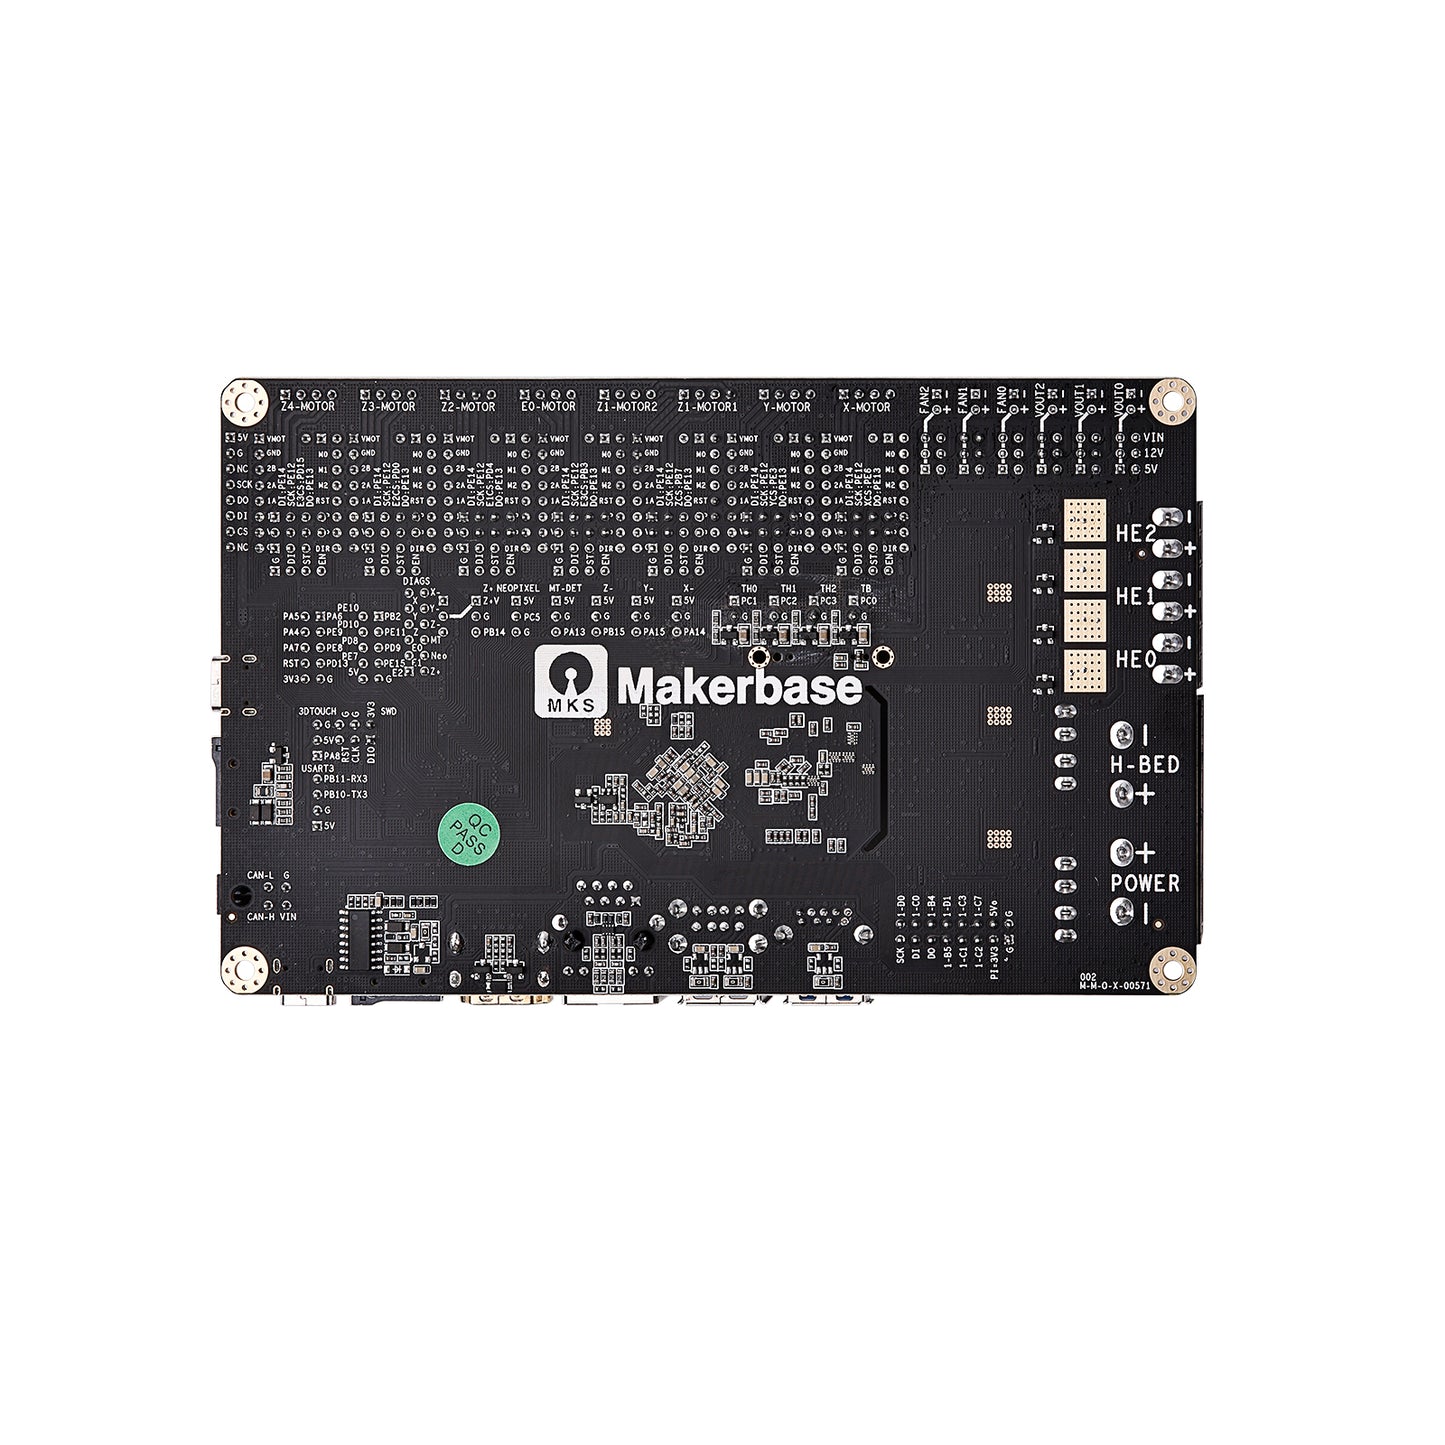 makerbase mks SKIPR 3d printer motherboard run klipper